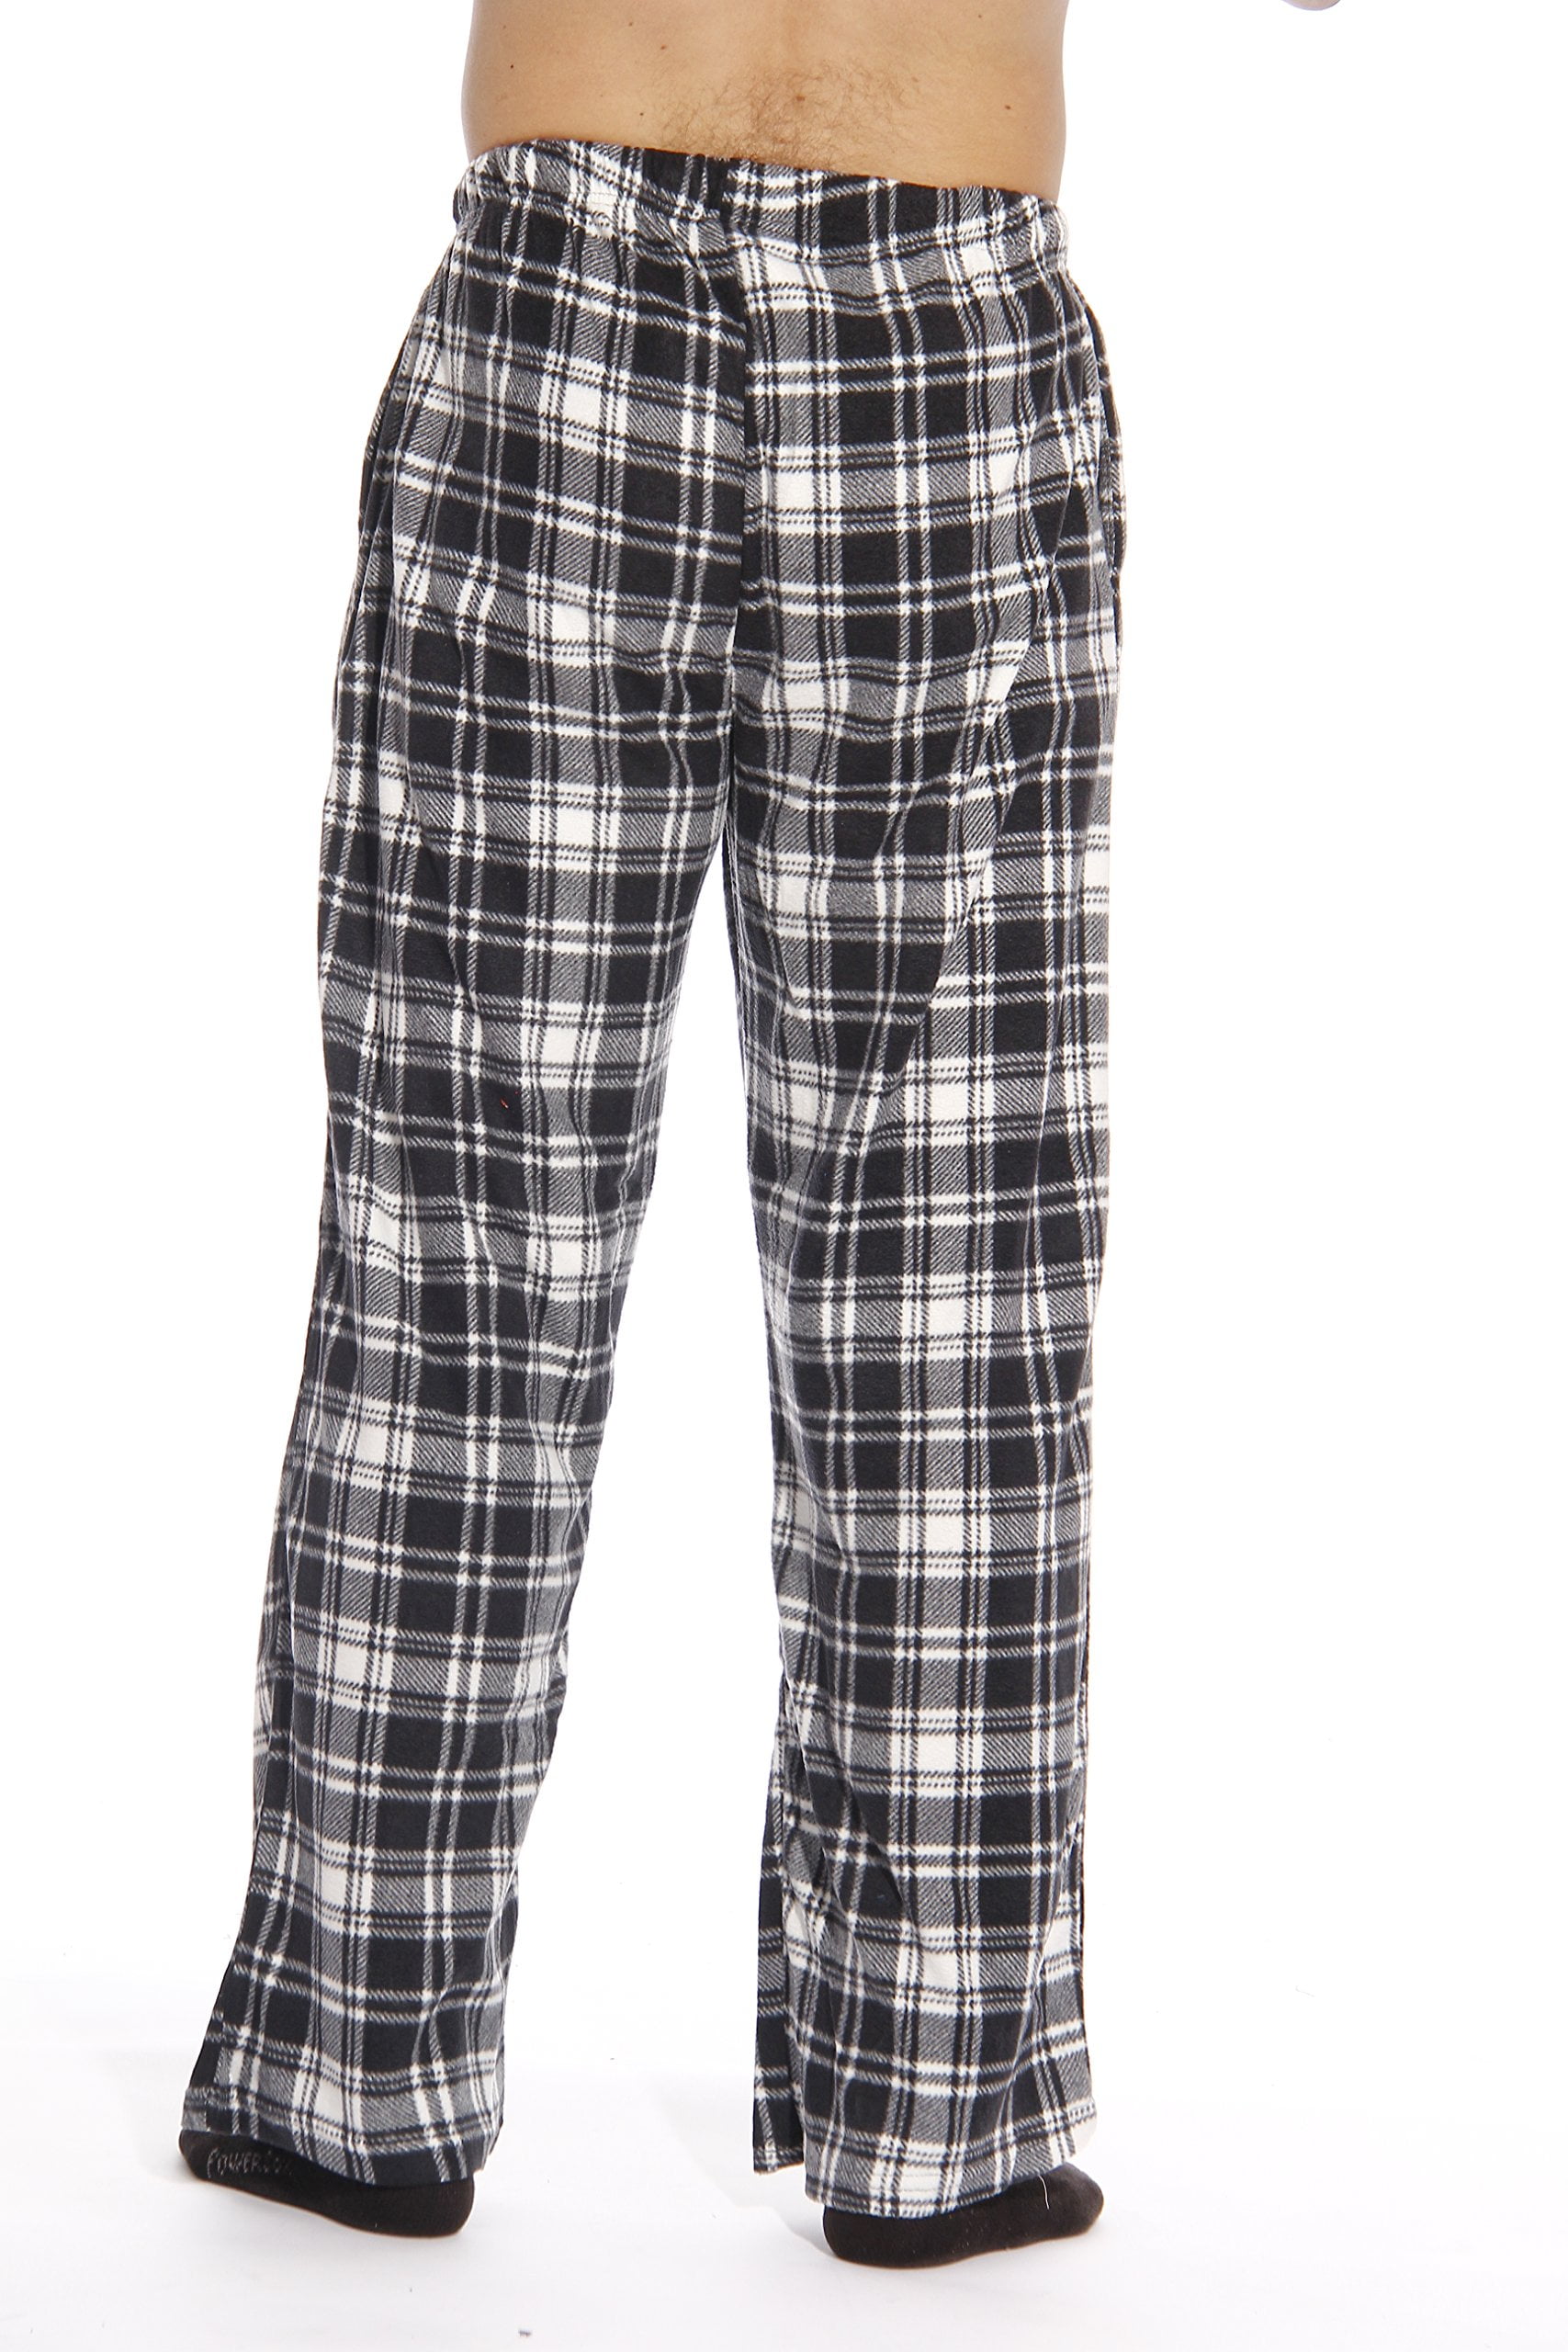 followme Microfleece Men's Buffalo Plaid Pajama Pants with Pockets (Black & White  Plaid, XX-Large) 